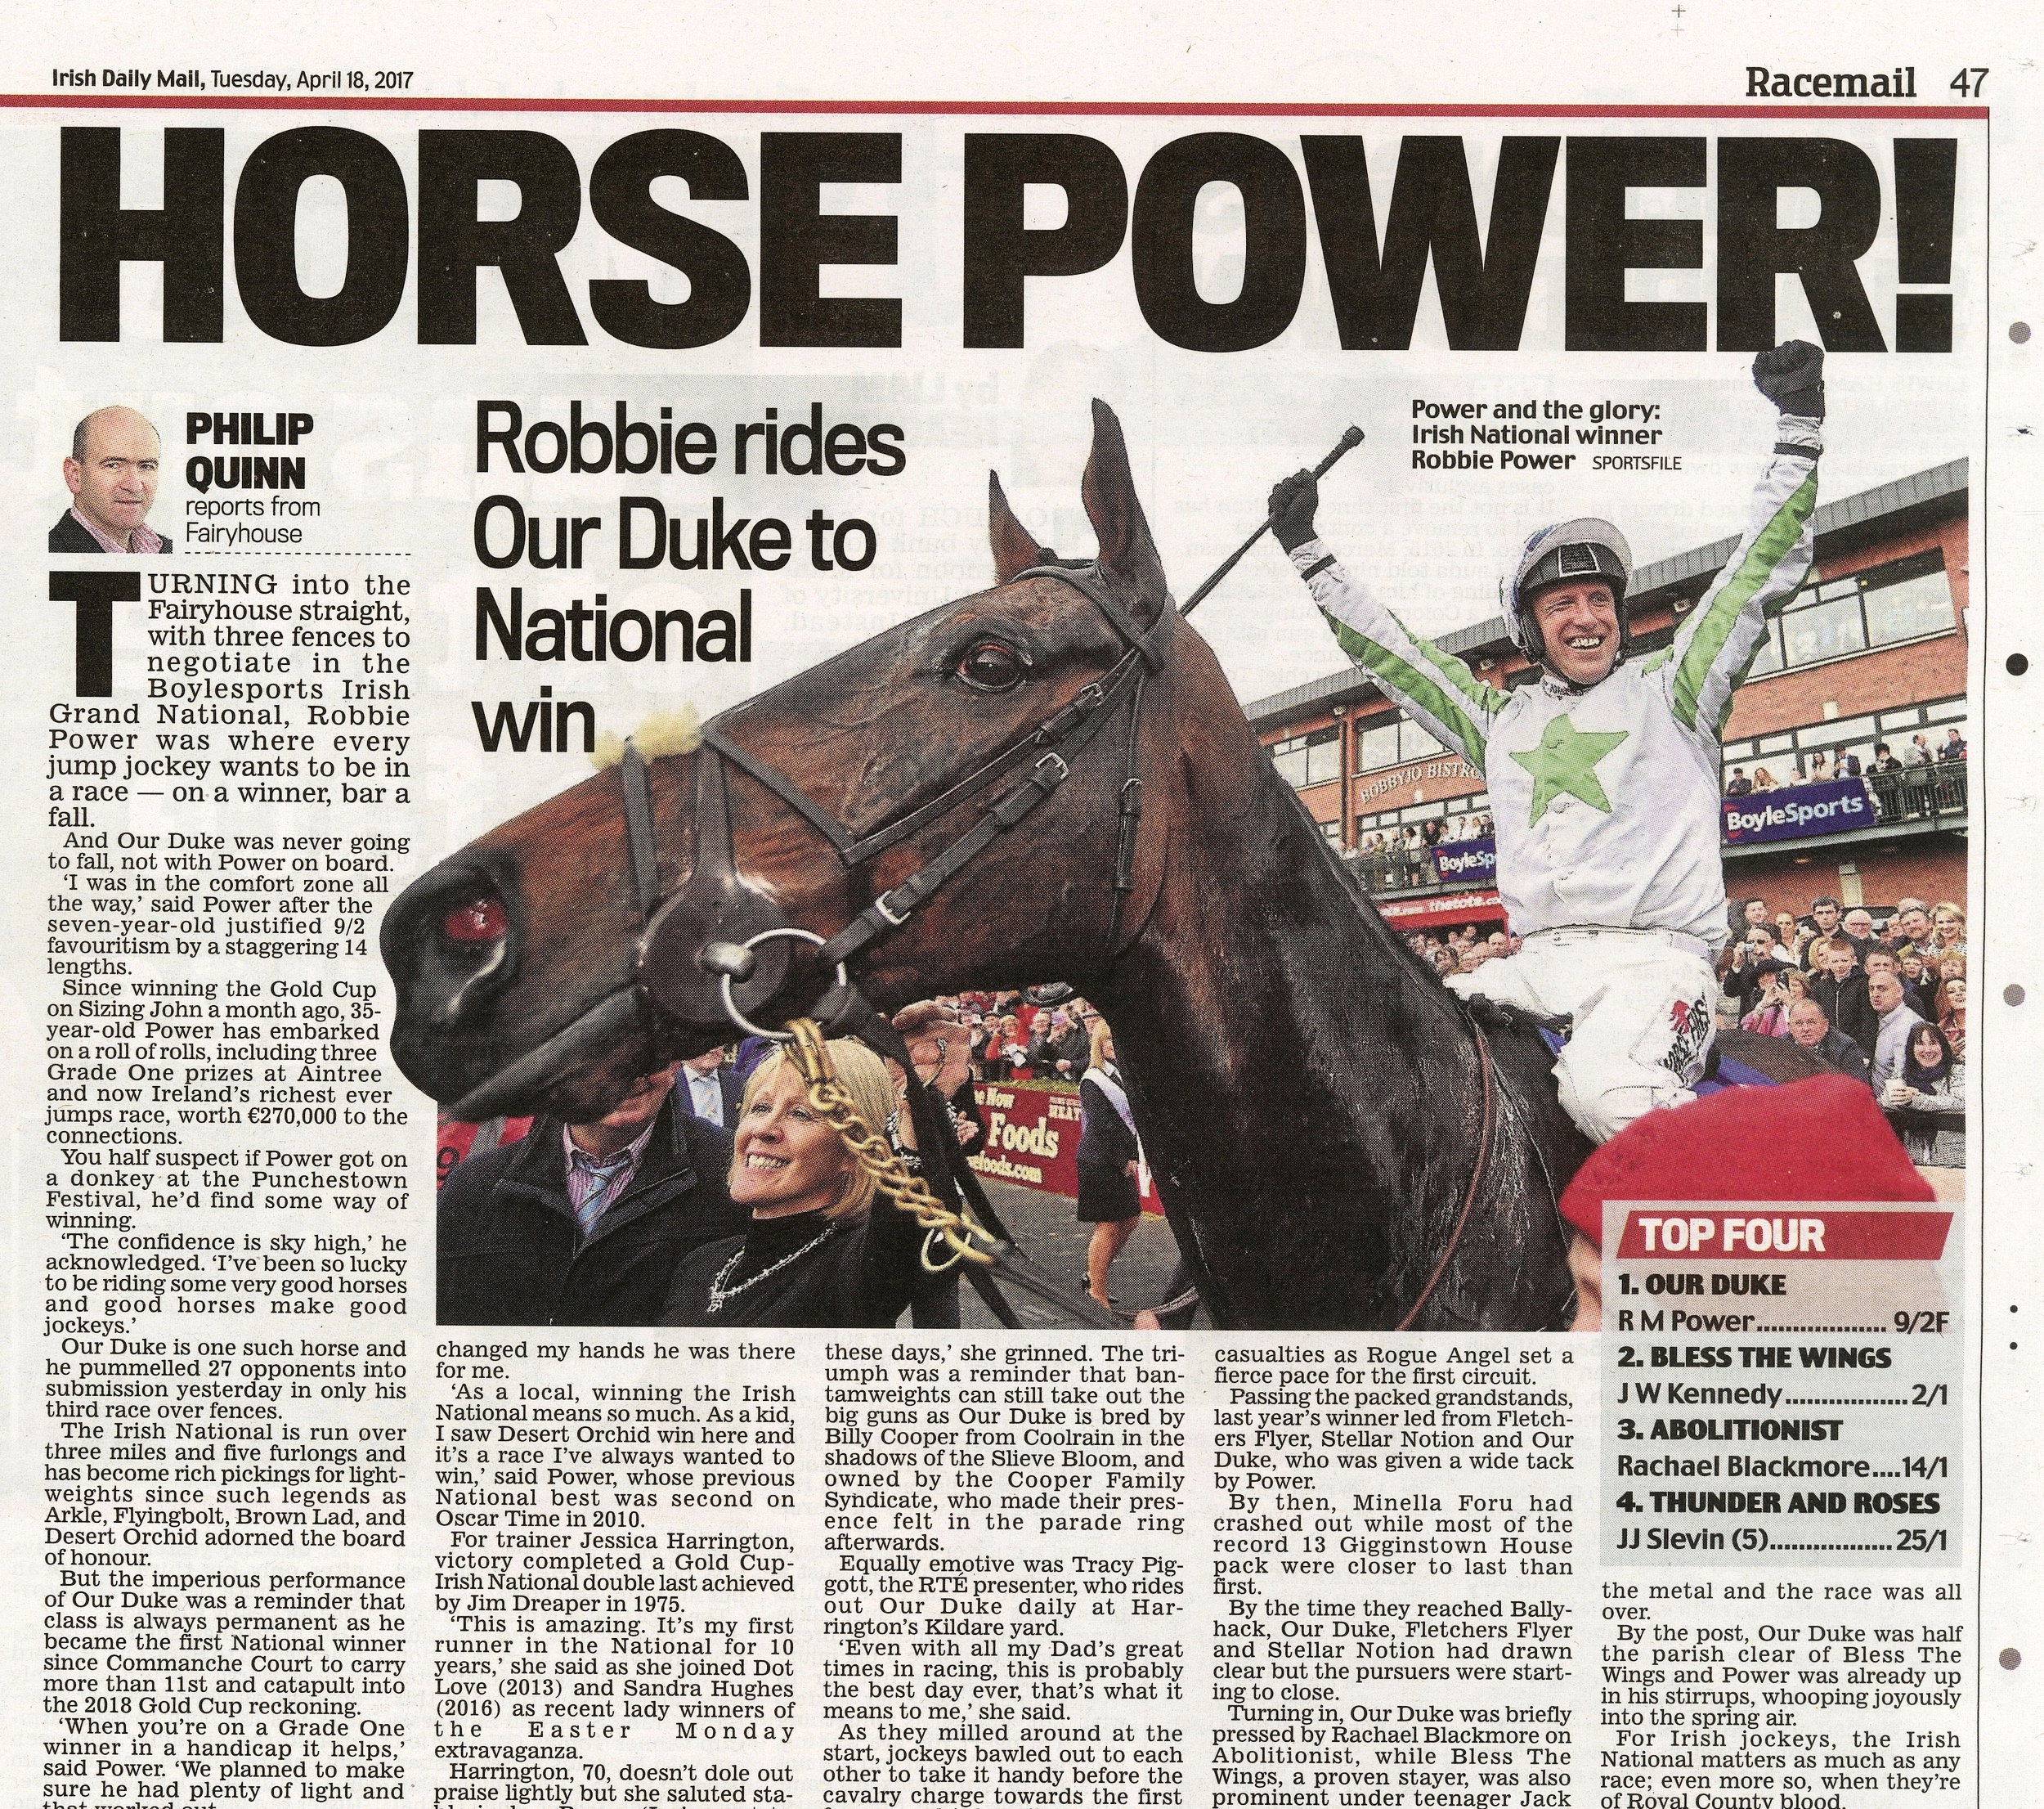  Robbie Power celebrates winning the Irish National on Our Duke at Fairyhouse Racecourse April 18 2017  Irish Daily Mail  